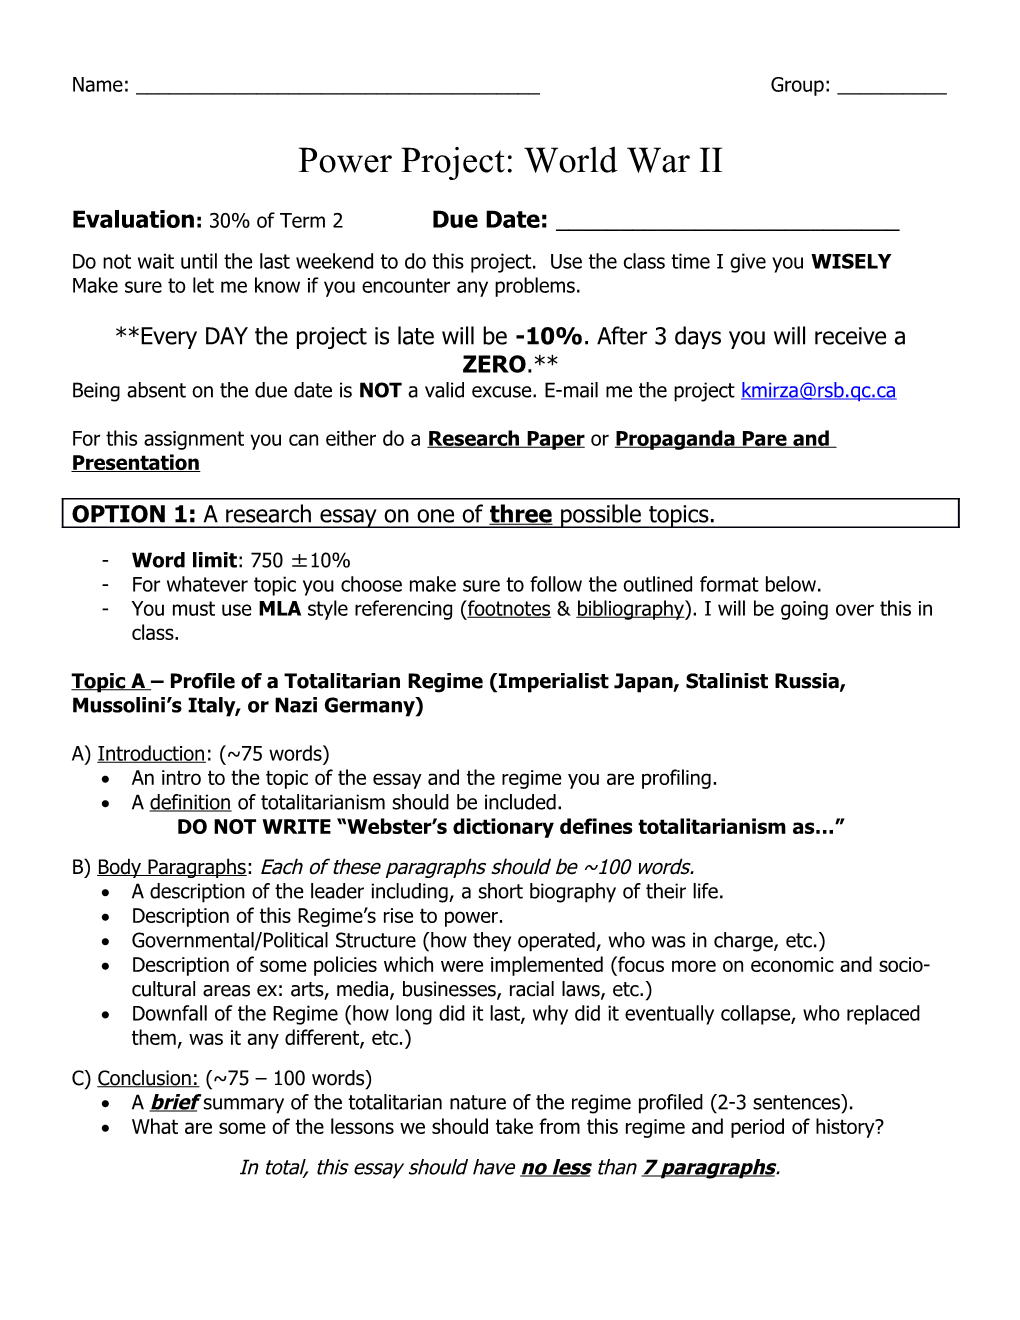 Power Project: World War II